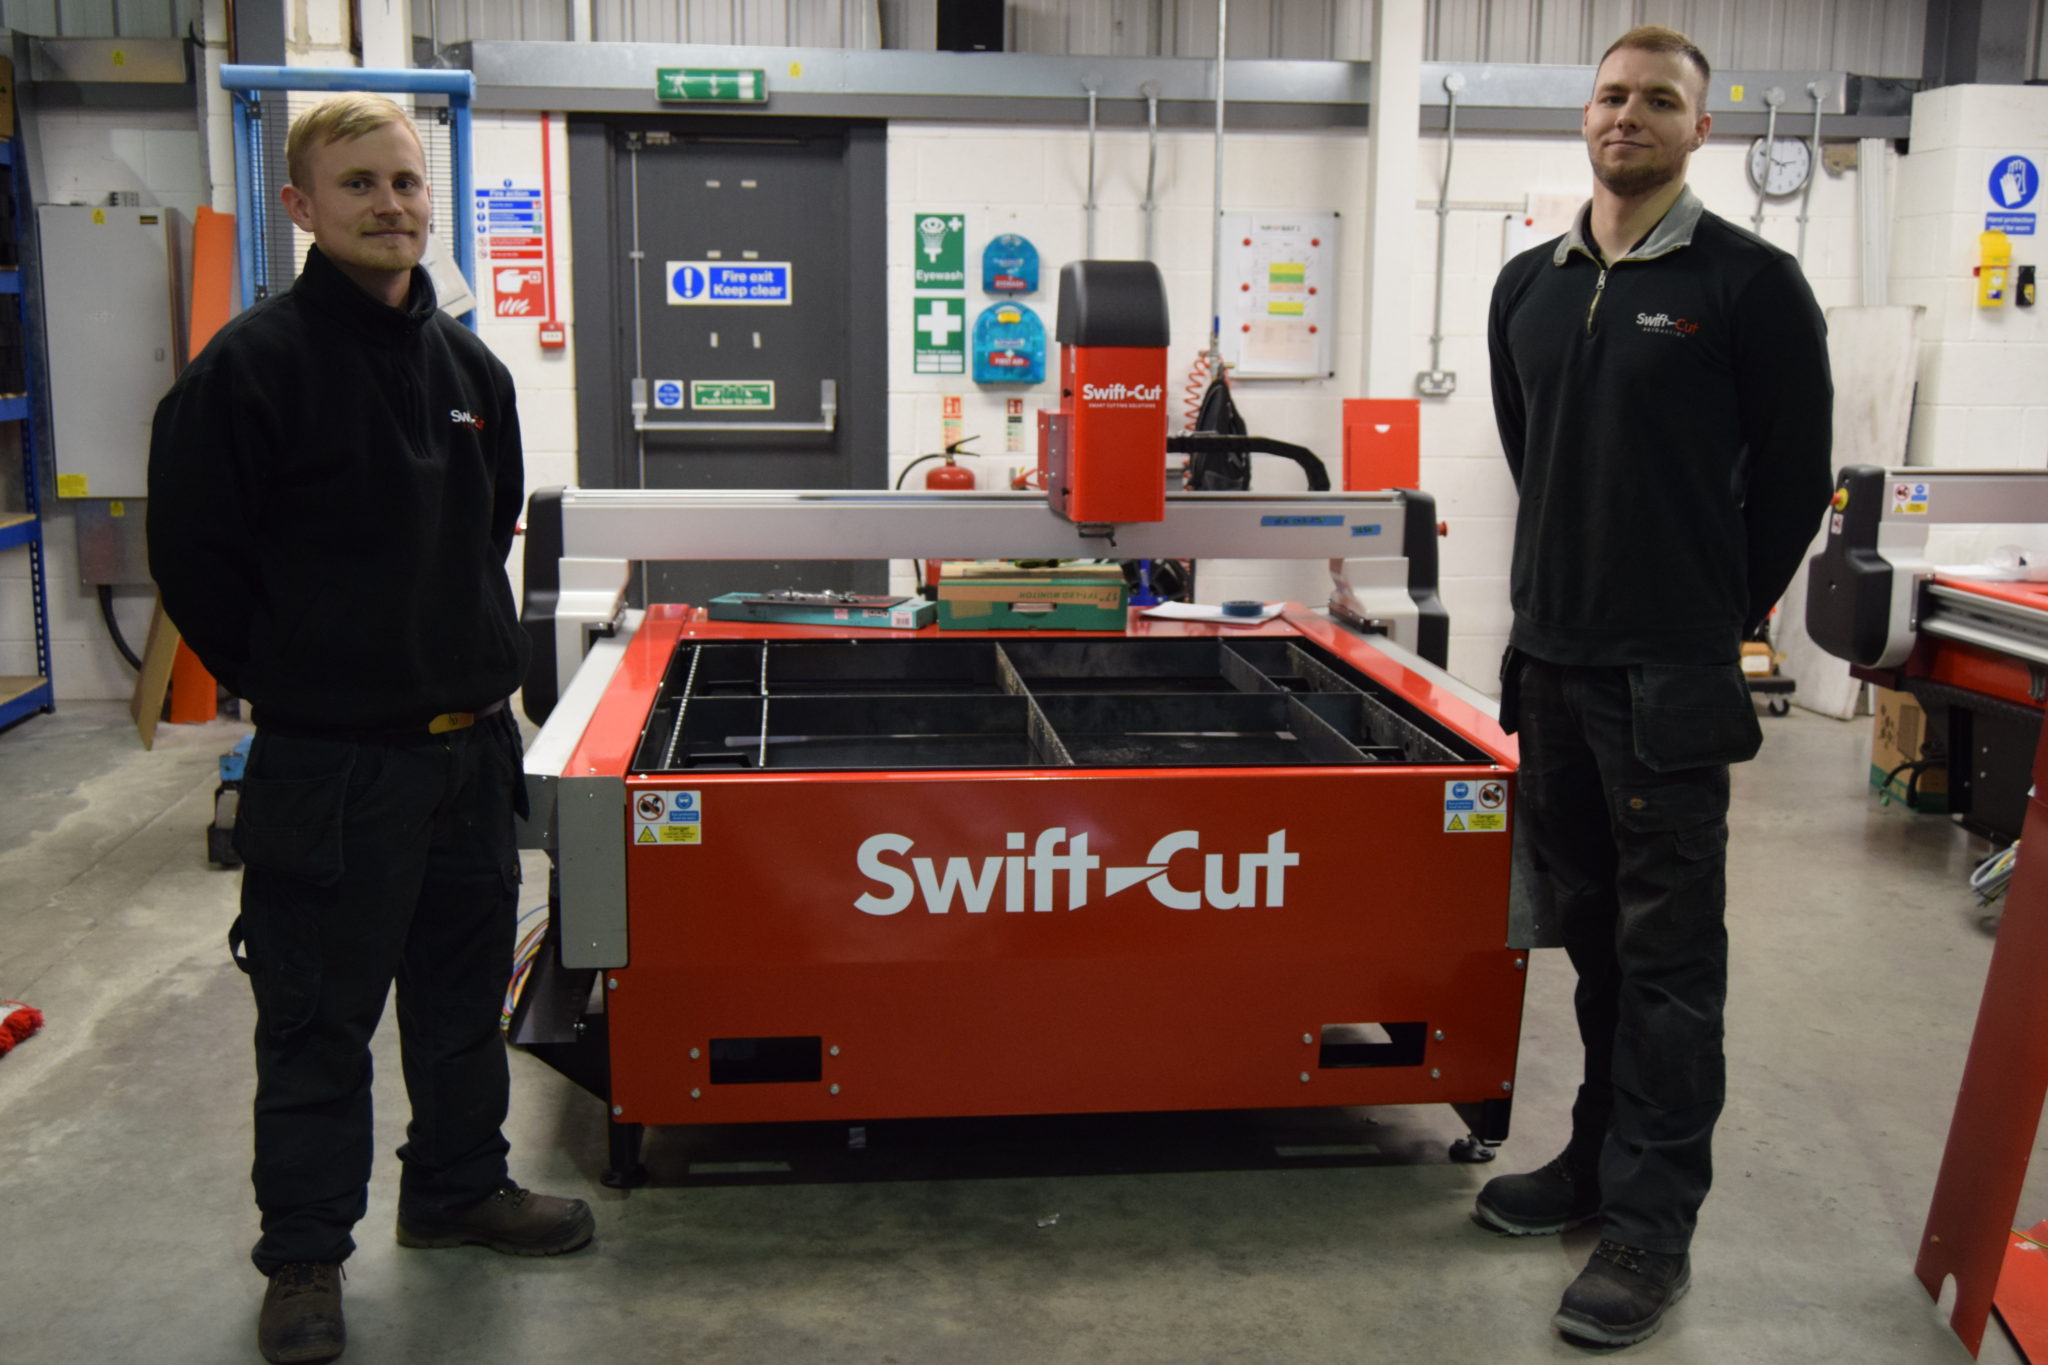 Swift-Cut apprentices